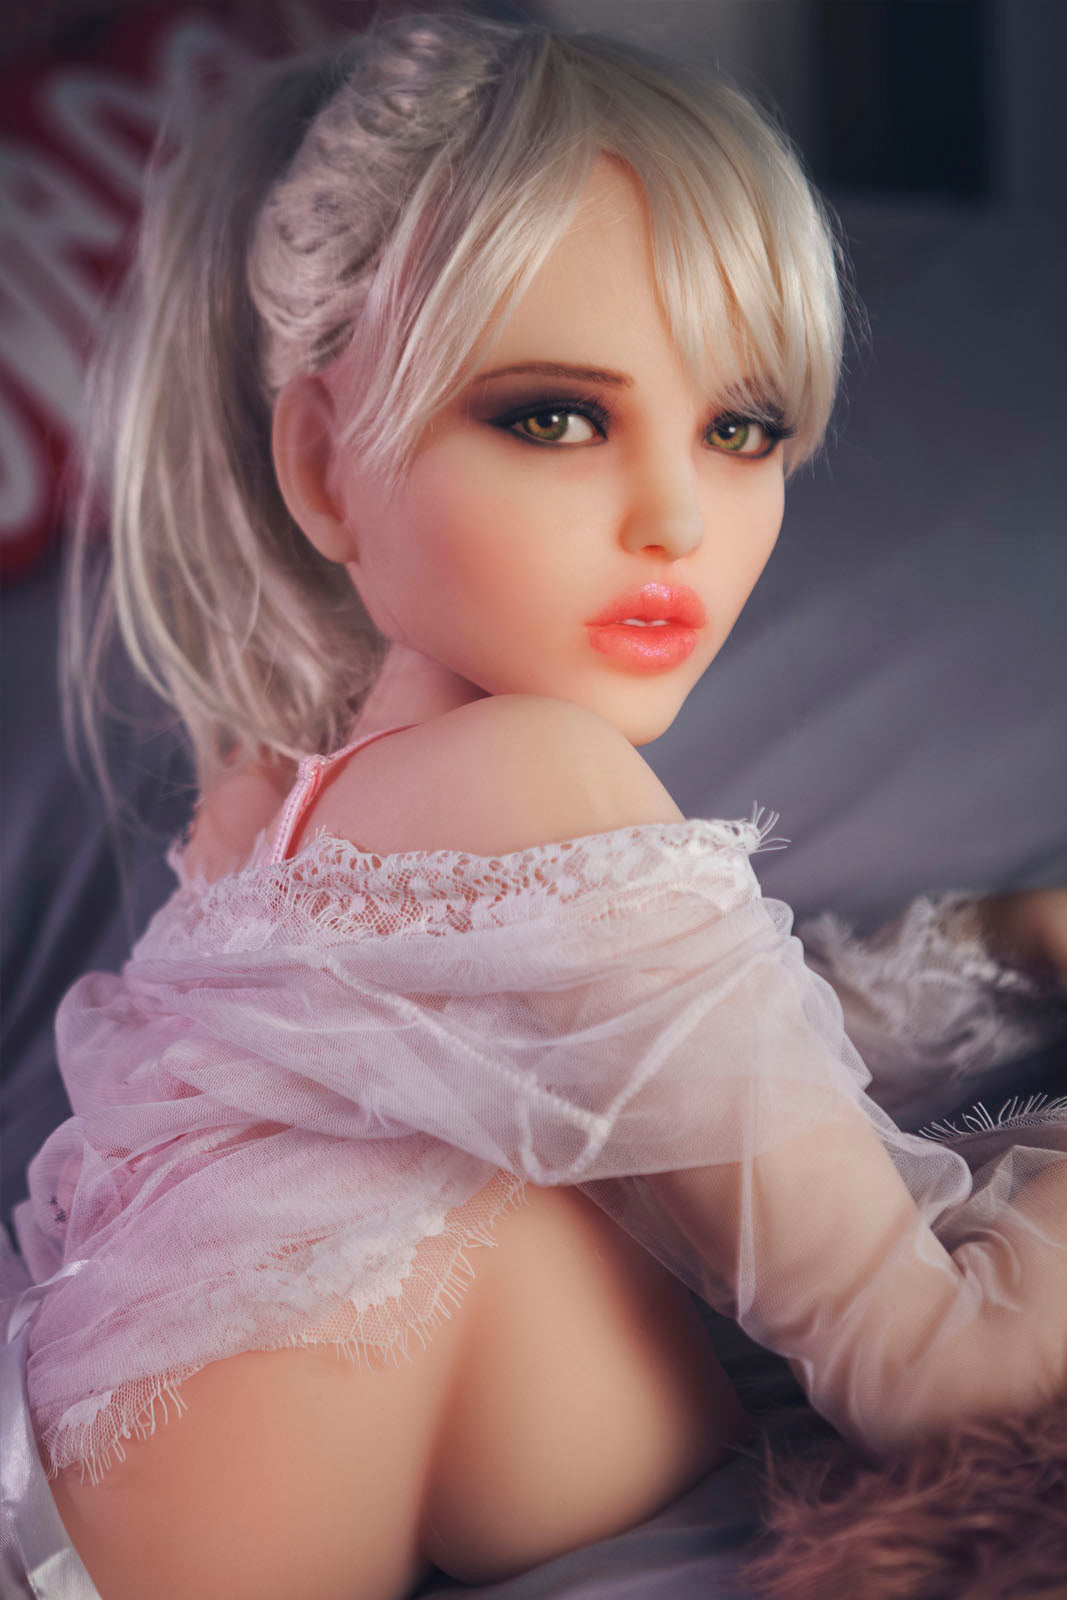 Doll Forever - Real Love Doll - 4ft 9in (145cm) - Marilyn - Love Dolls 4U